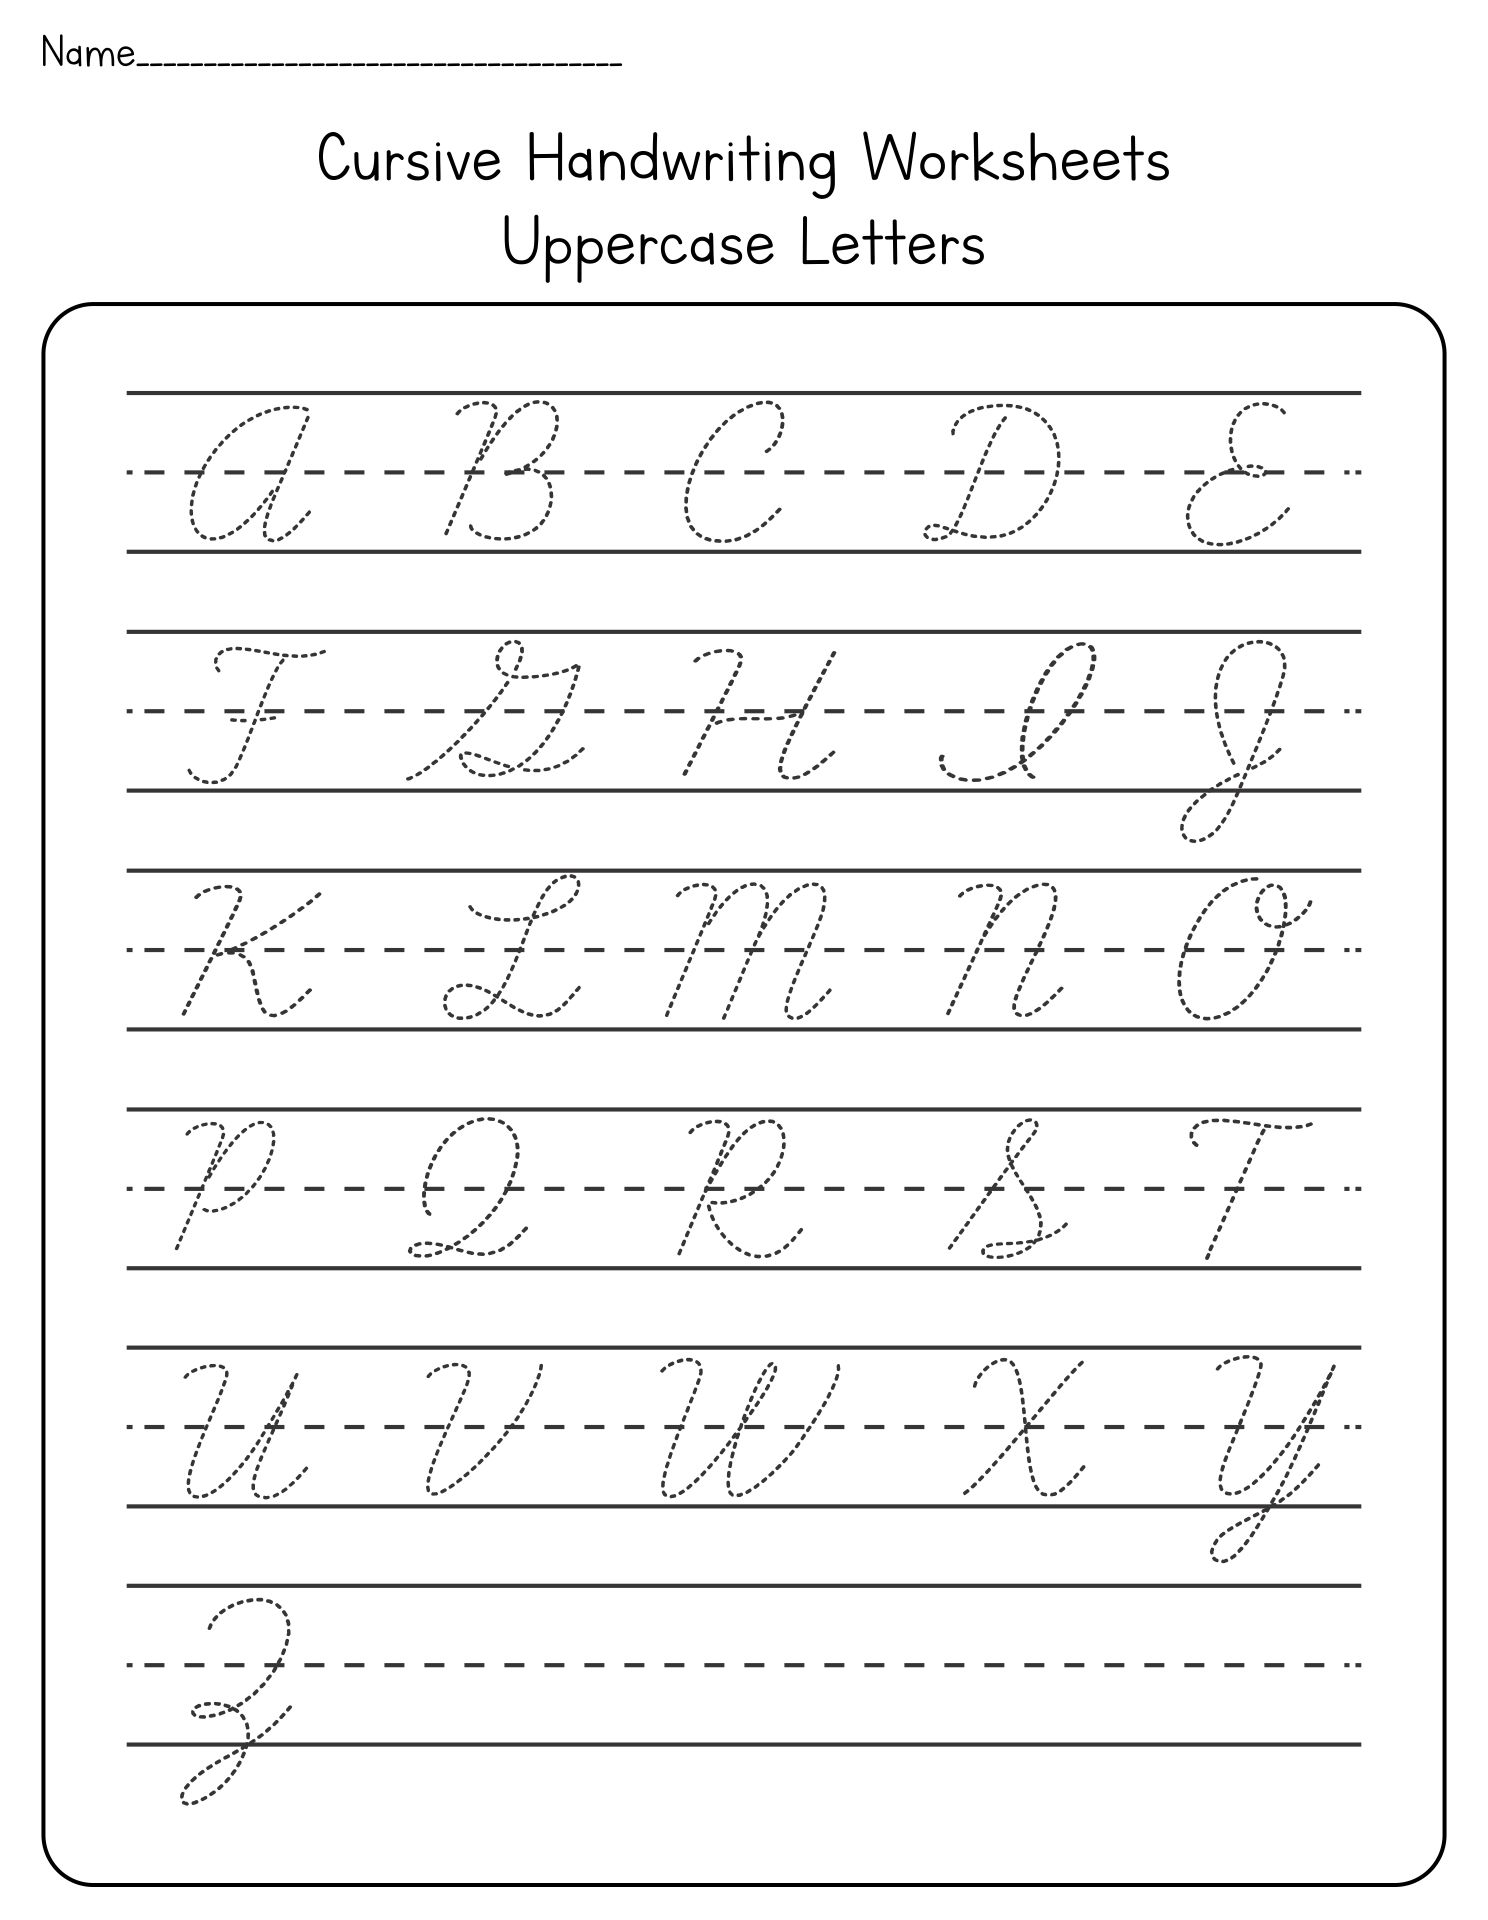 cursive-alphabet-worksheets-printable-cursive-handwriting-worksheets